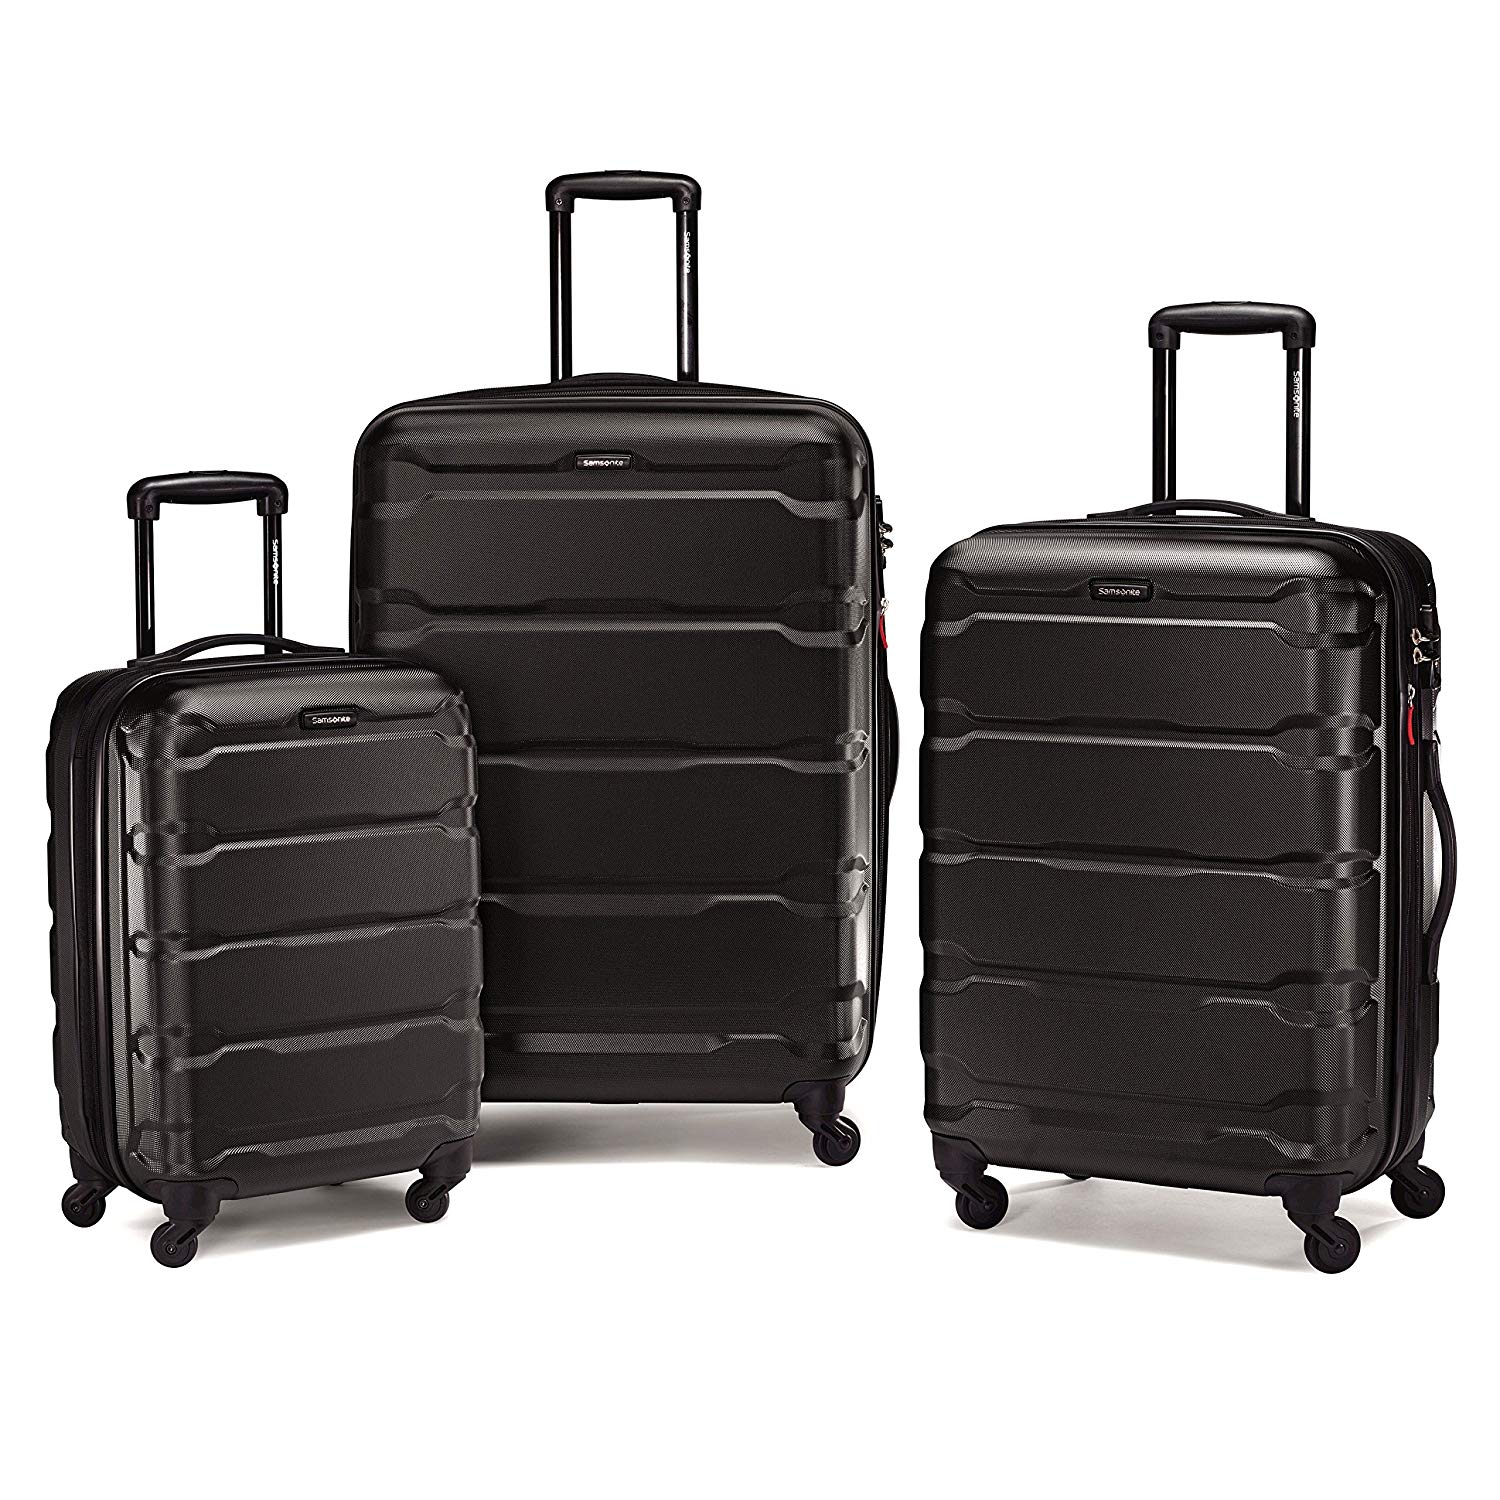 Samsonite Omni Multi-Directional Hardside Luggage Set, 3-Piece